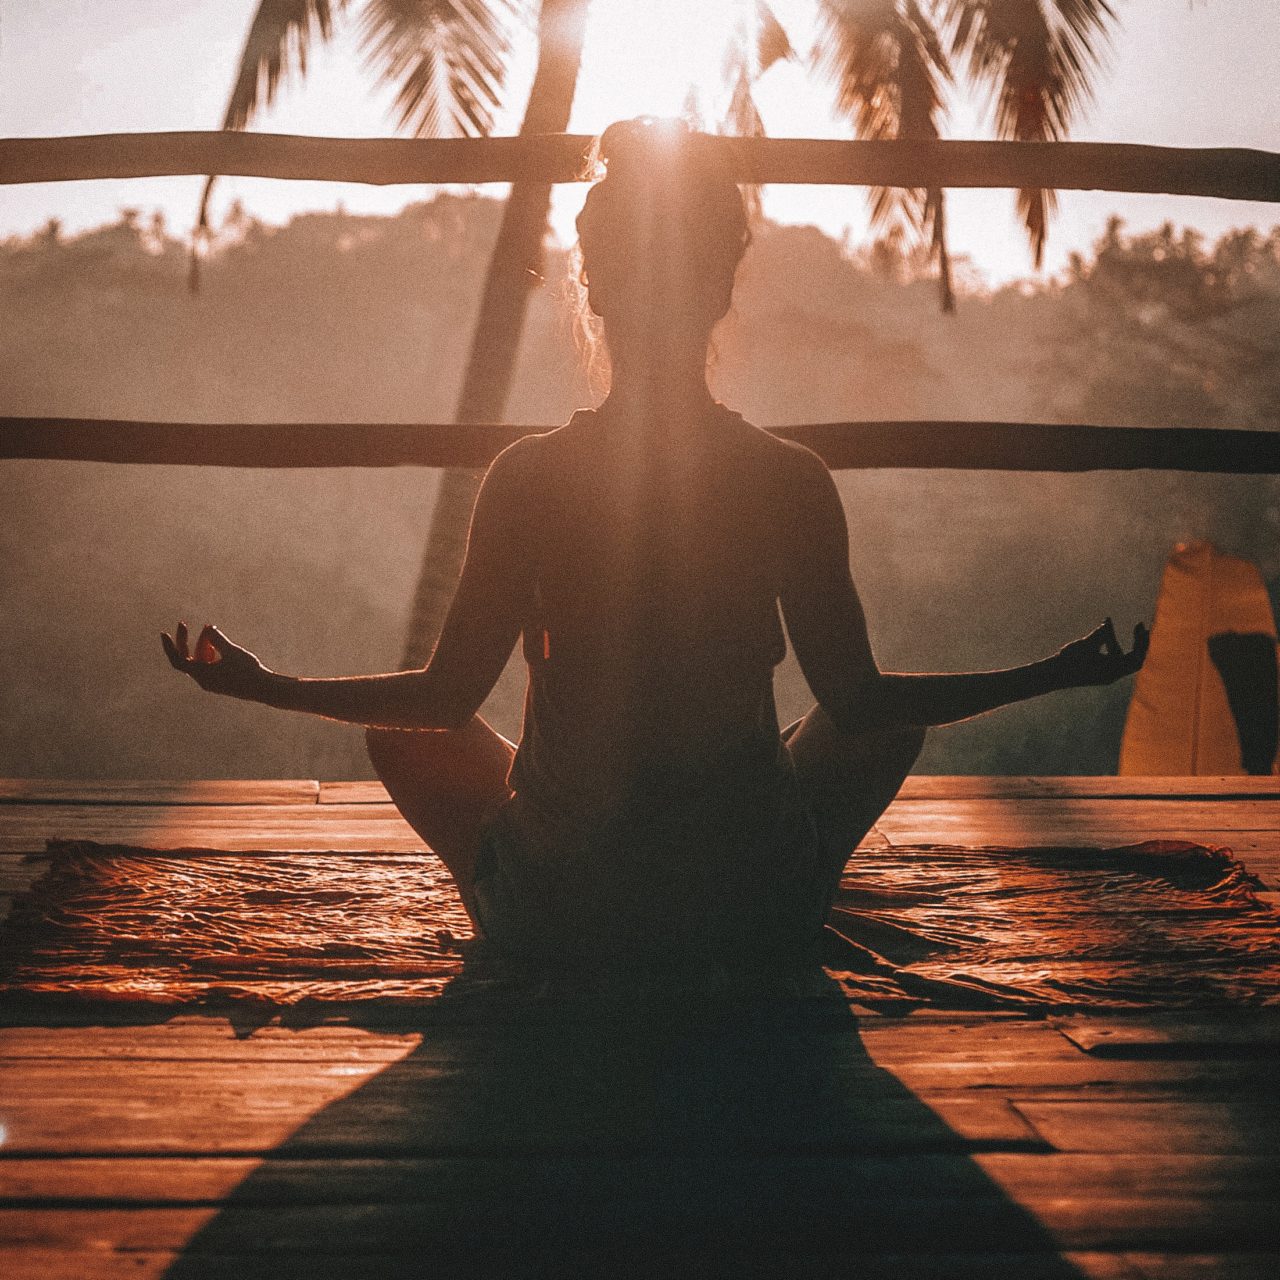 https://elevatehwc.com/wp-content/uploads/2018/09/yoga-pose-in-sunset-unsplash-1-1280x1280.jpg